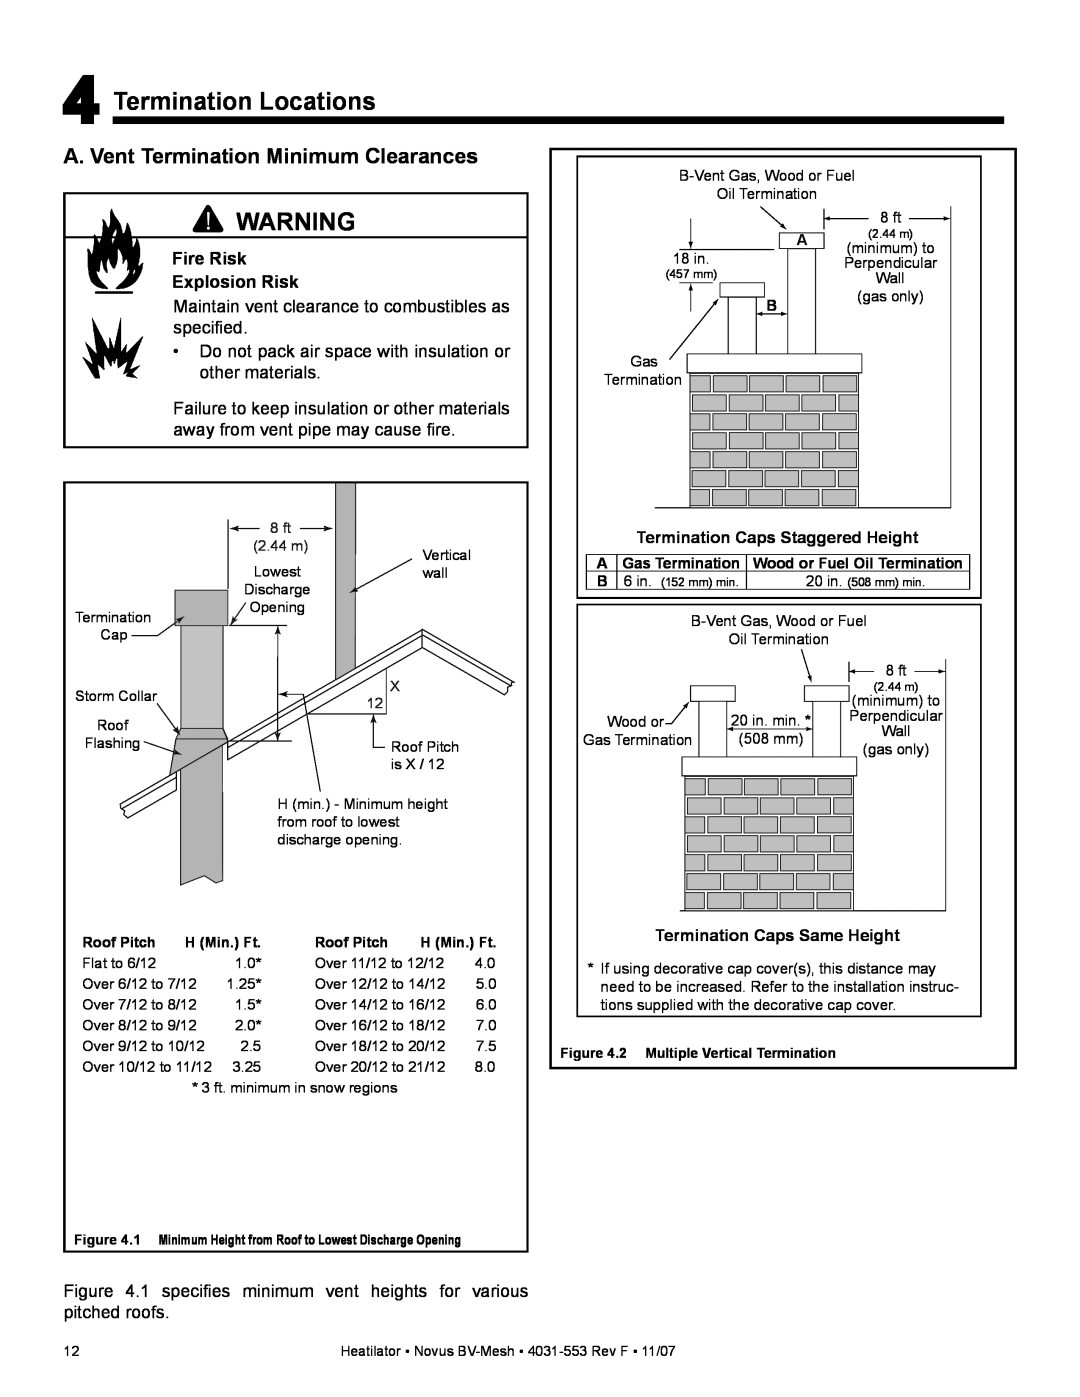 Heatiator NB3933MI, NB4842M Termination Locations, A. Vent Termination Minimum Clearances, Fire Risk Explosion Risk 